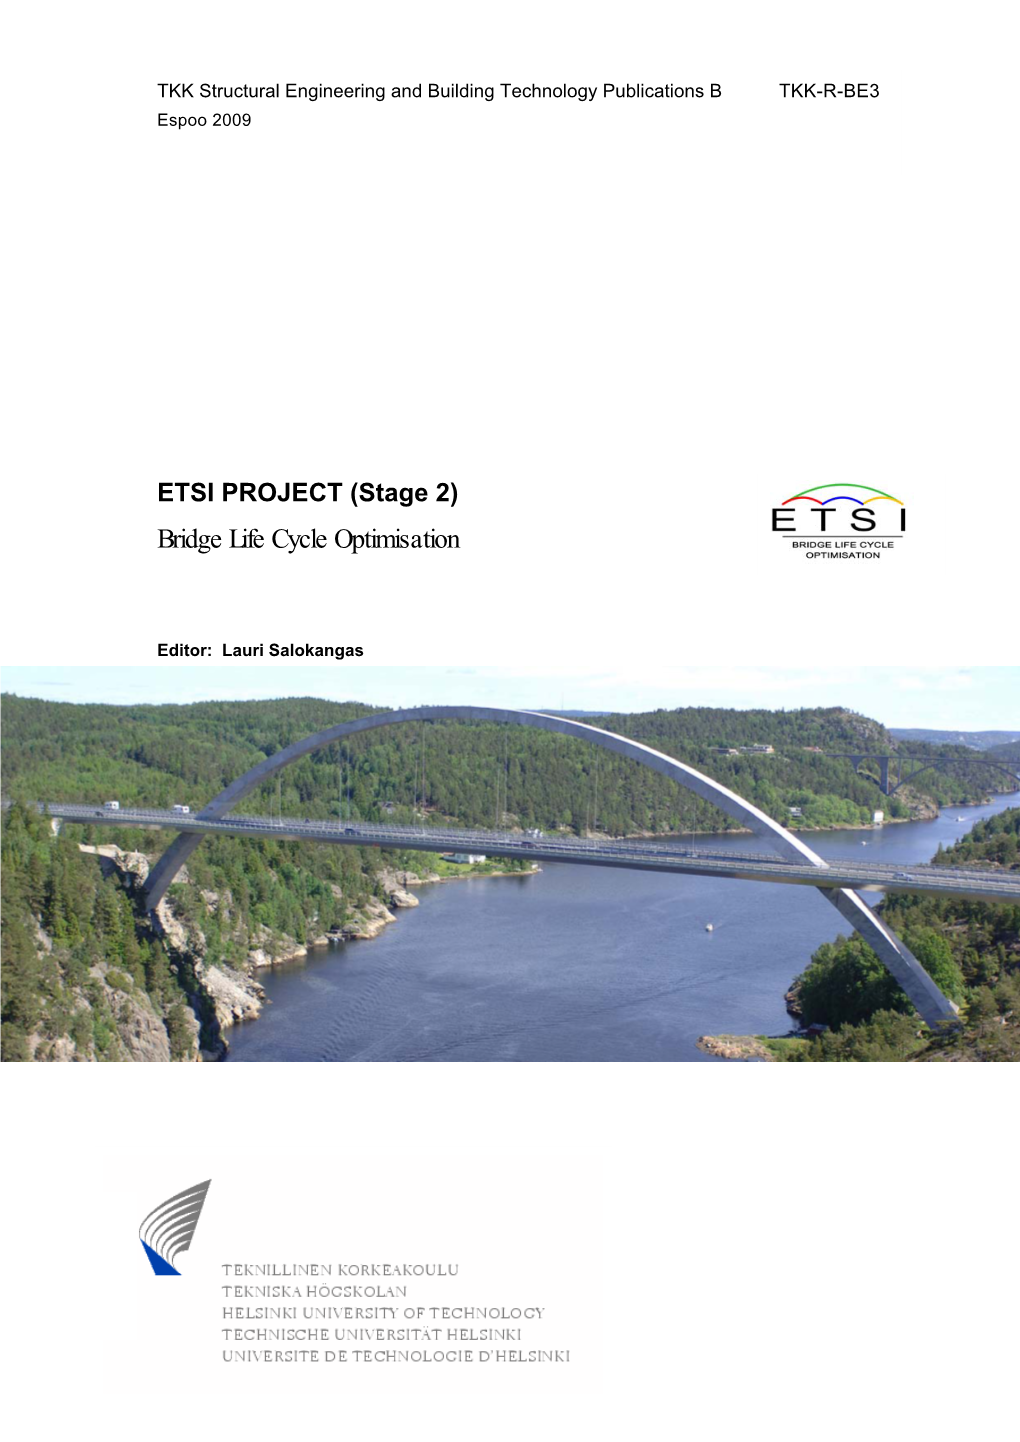 ETSI Project (Stage 2). Bridge Life Cycle Optimisation